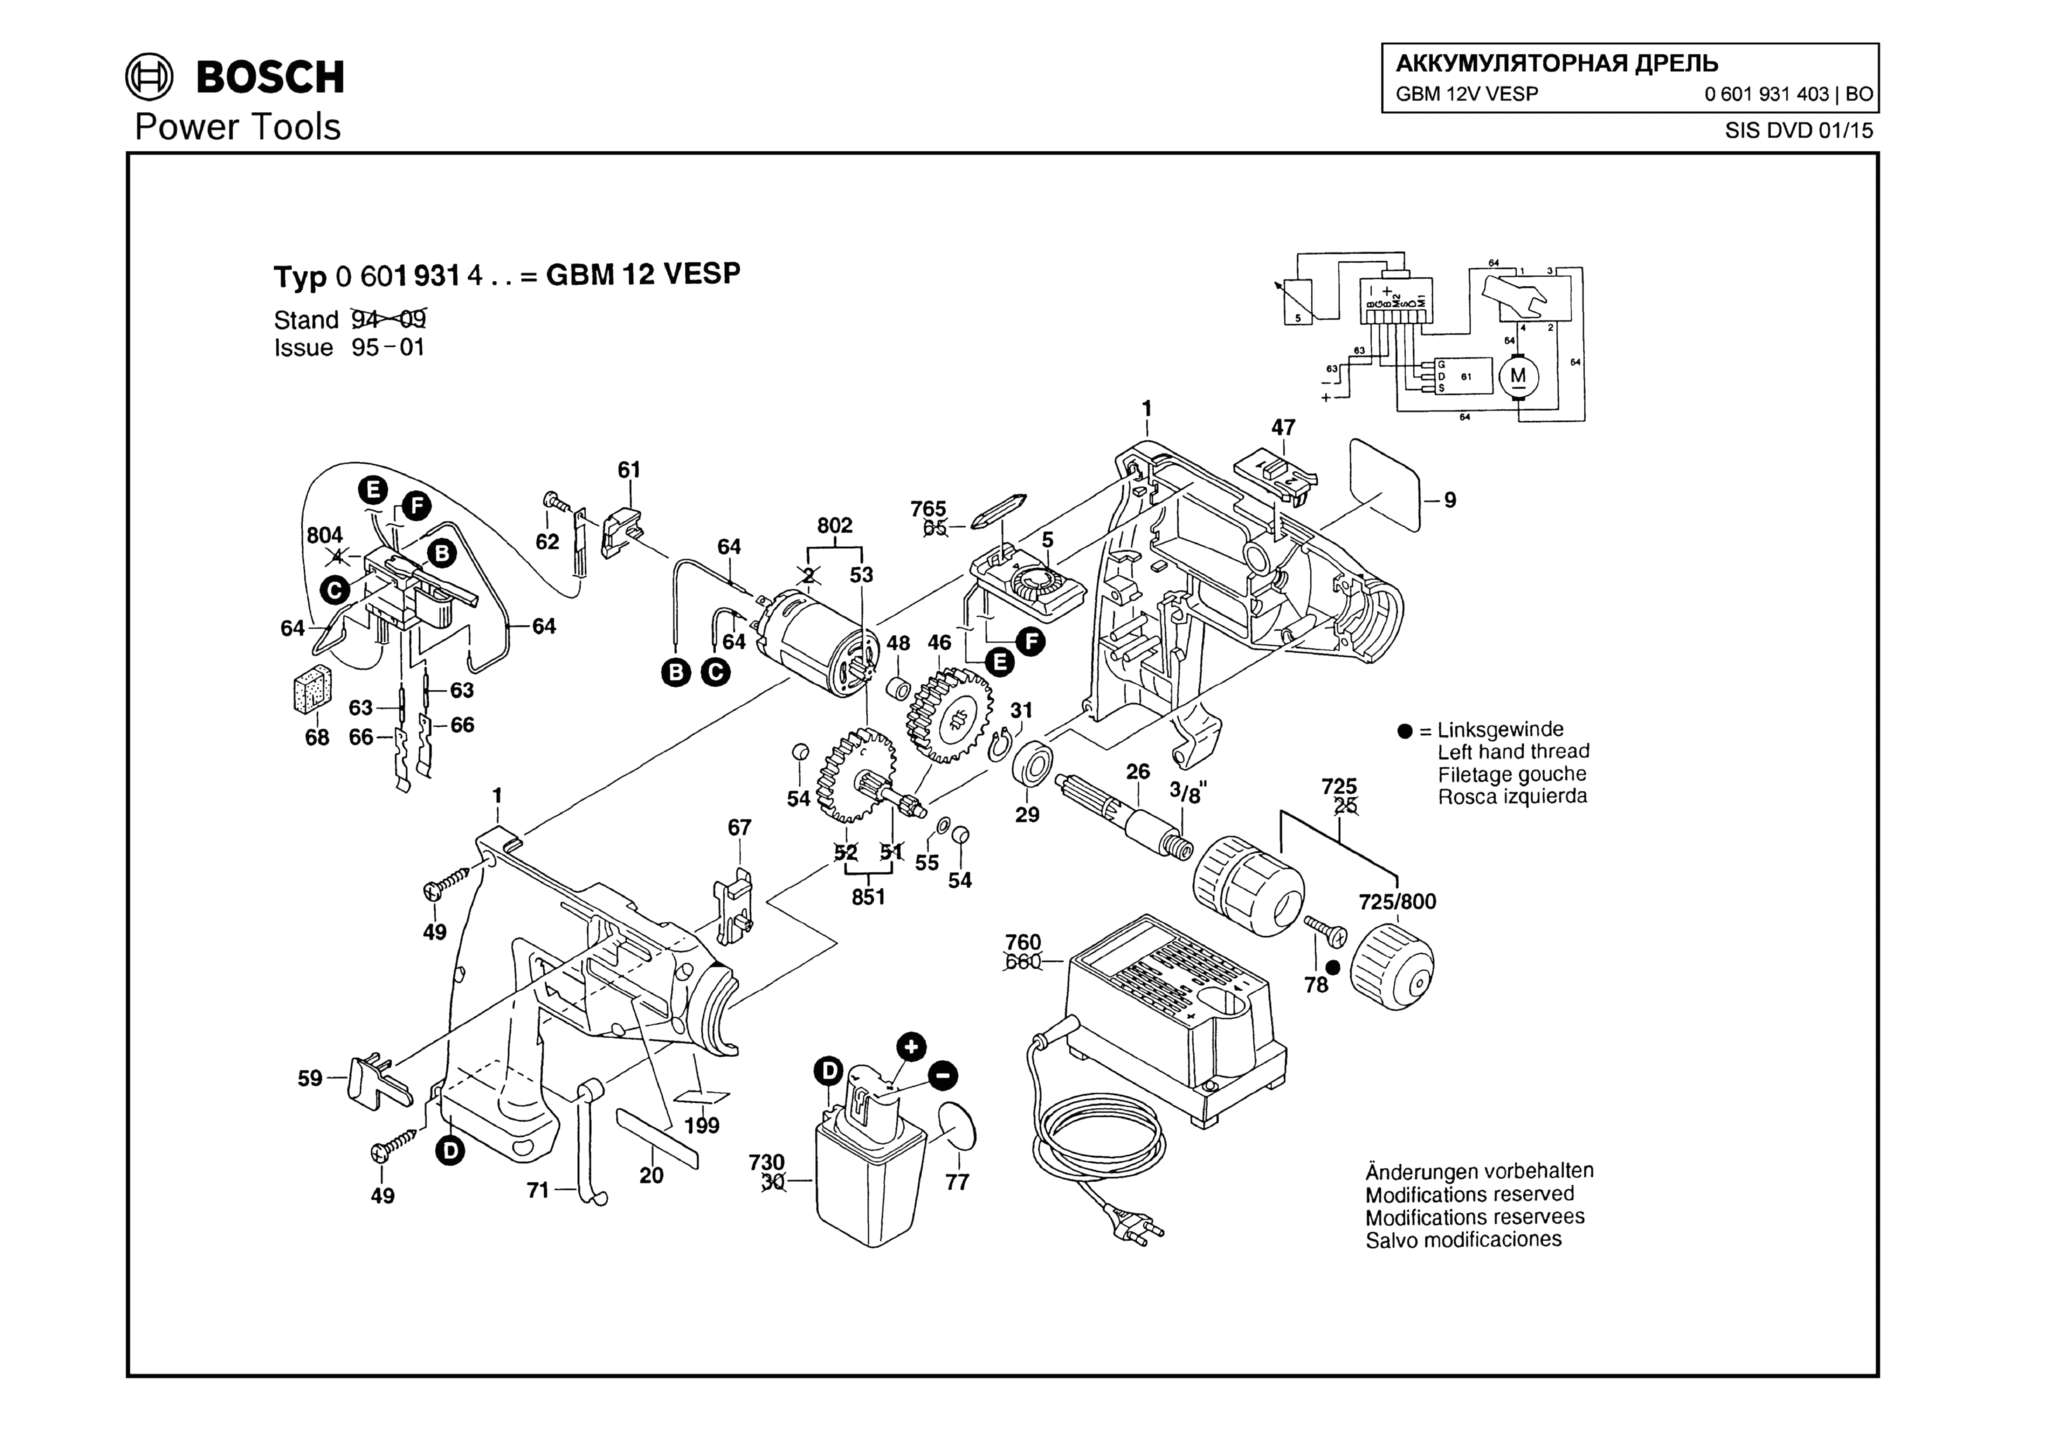 Запчасти, схема и деталировка Bosch GBM 12V VESP (ТИП 0601931403)